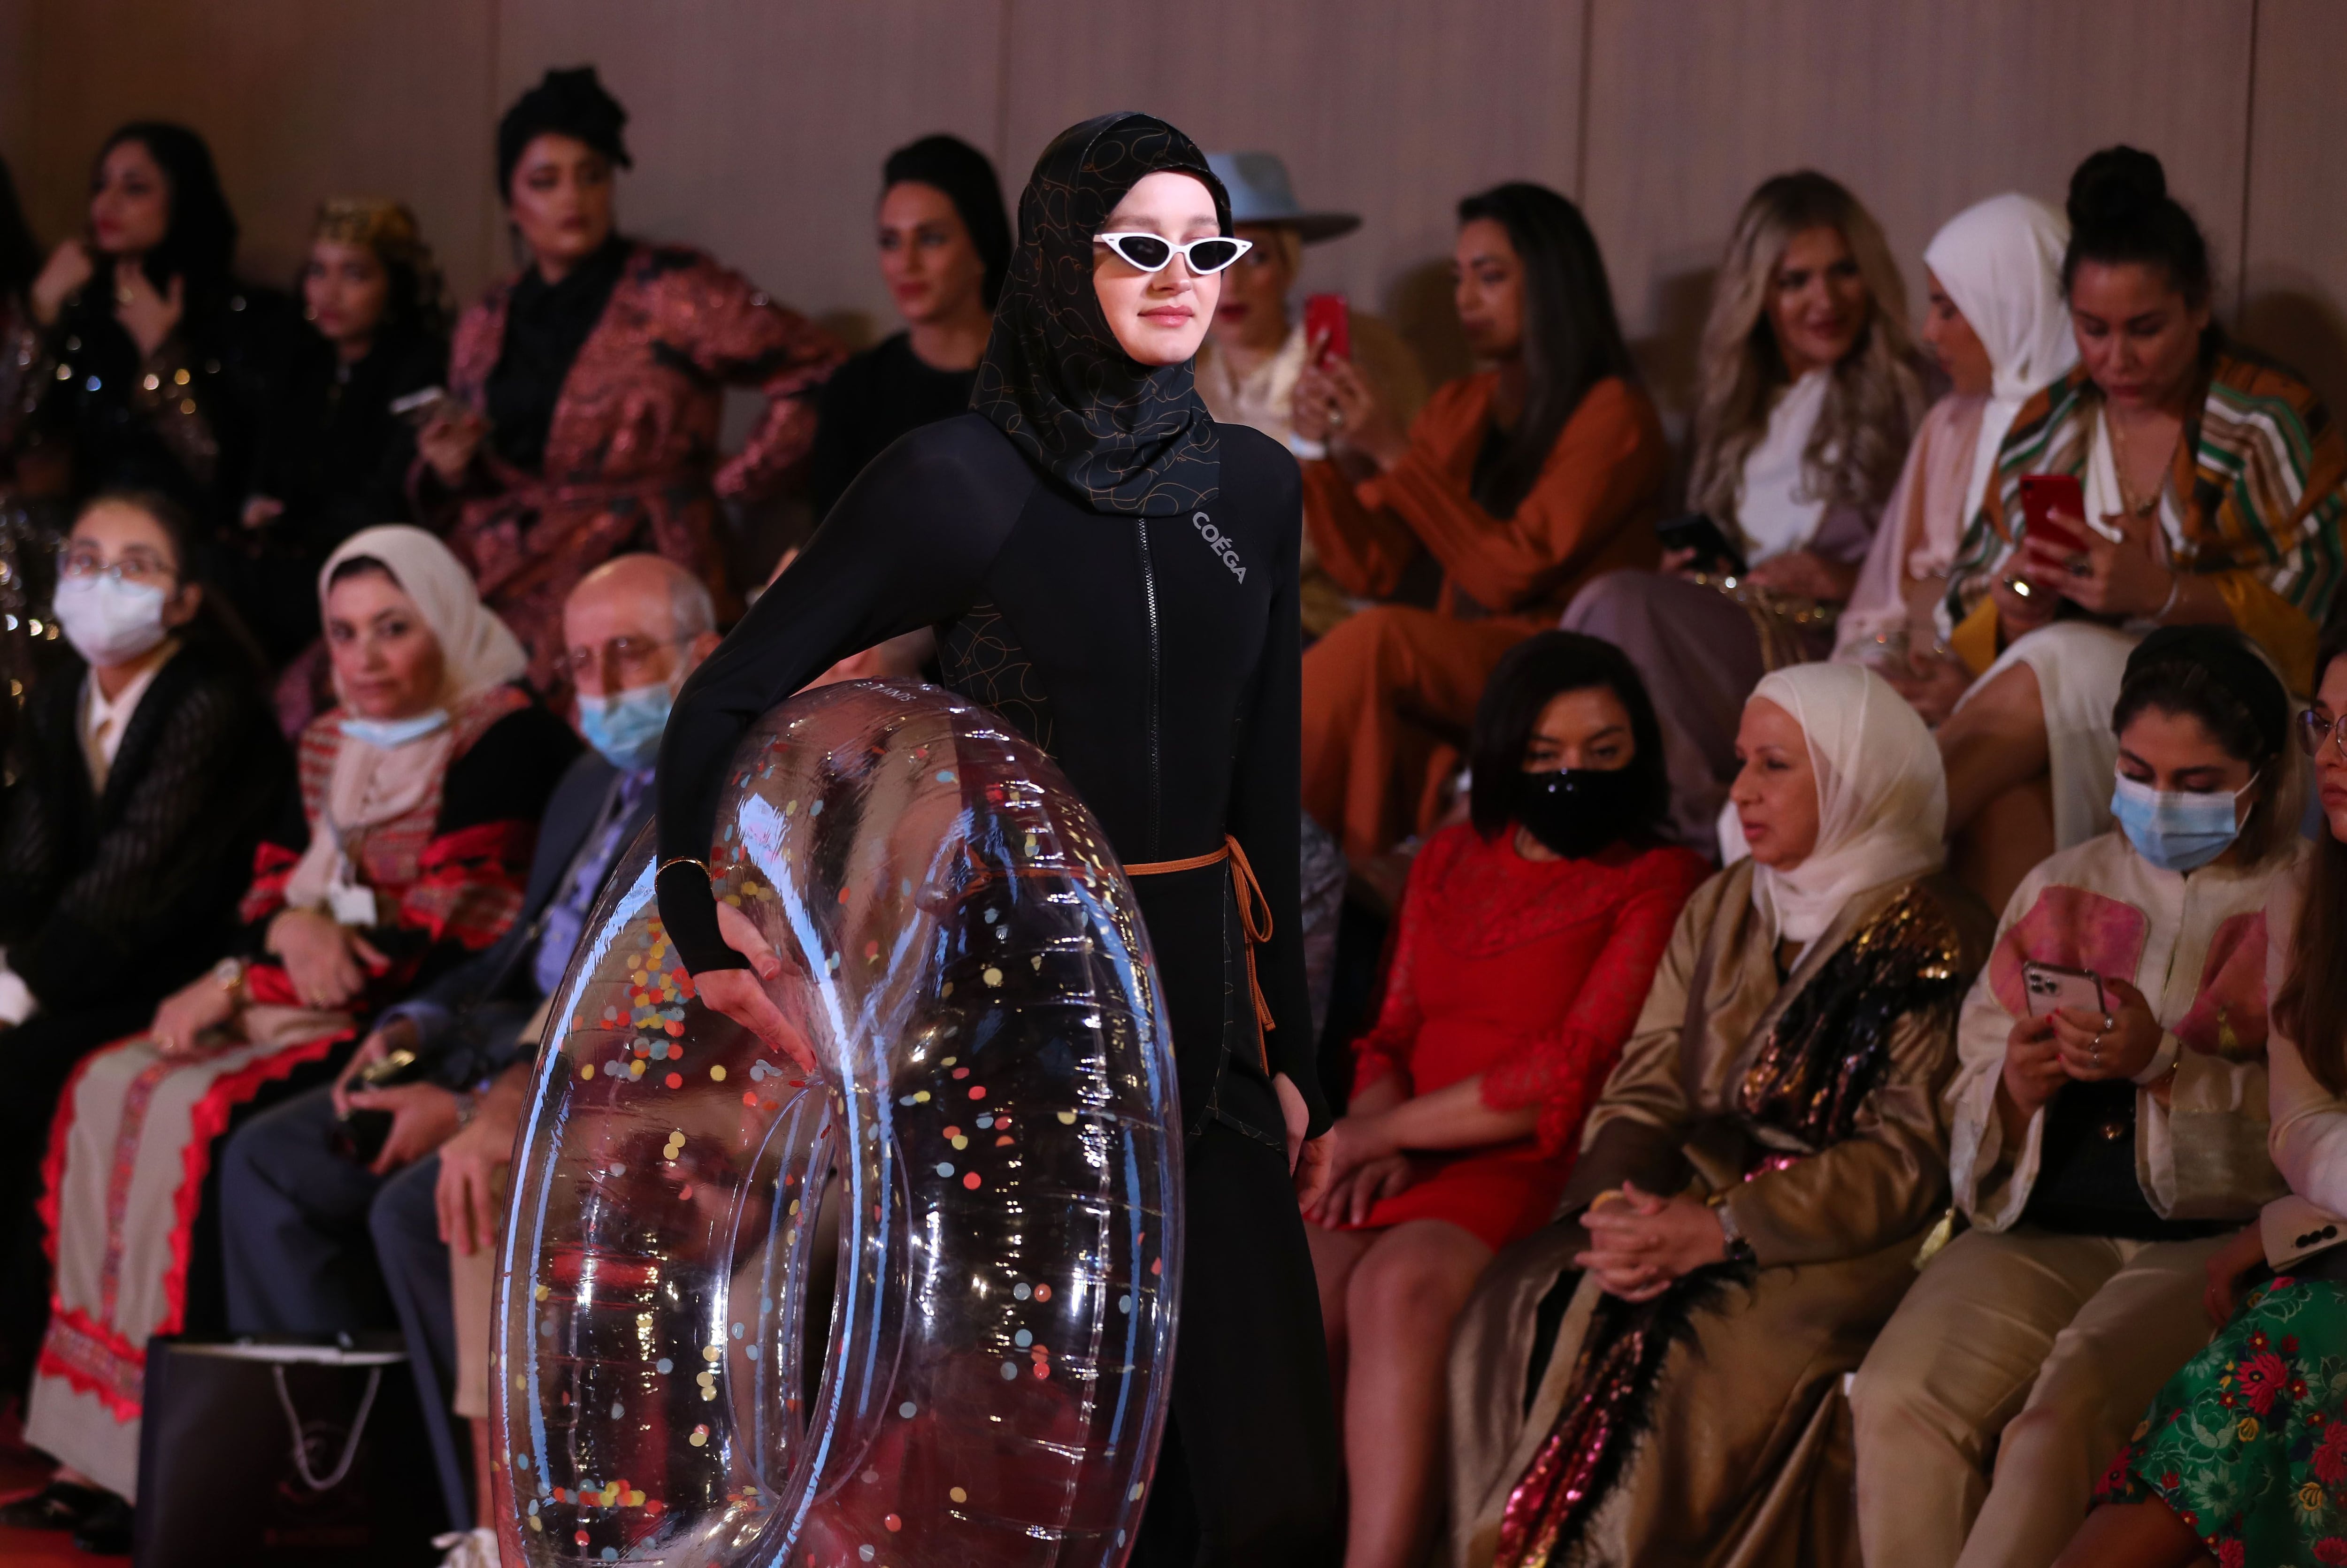 Dubai Modest Fashion Week convenes with chic, conservative designs